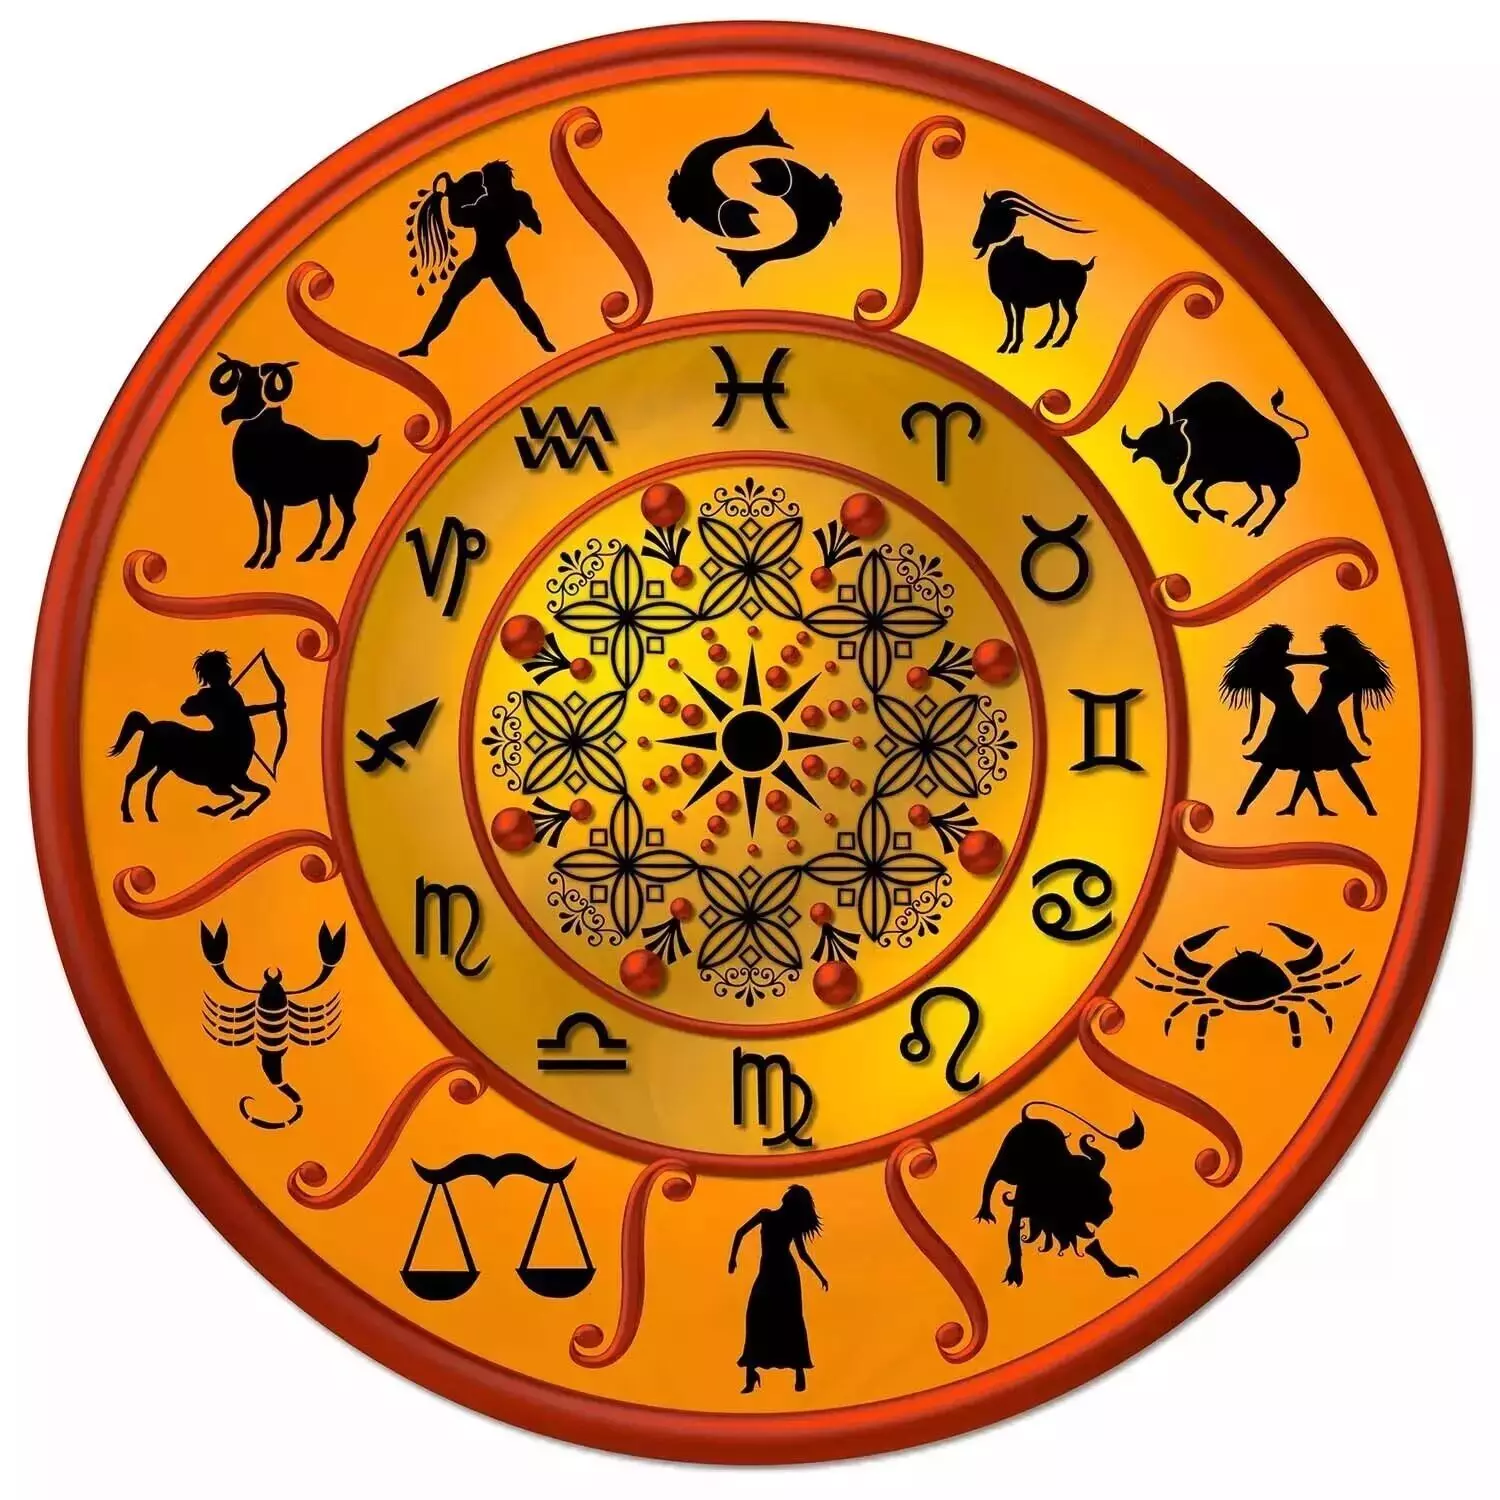 18 November – Know your todays horoscope